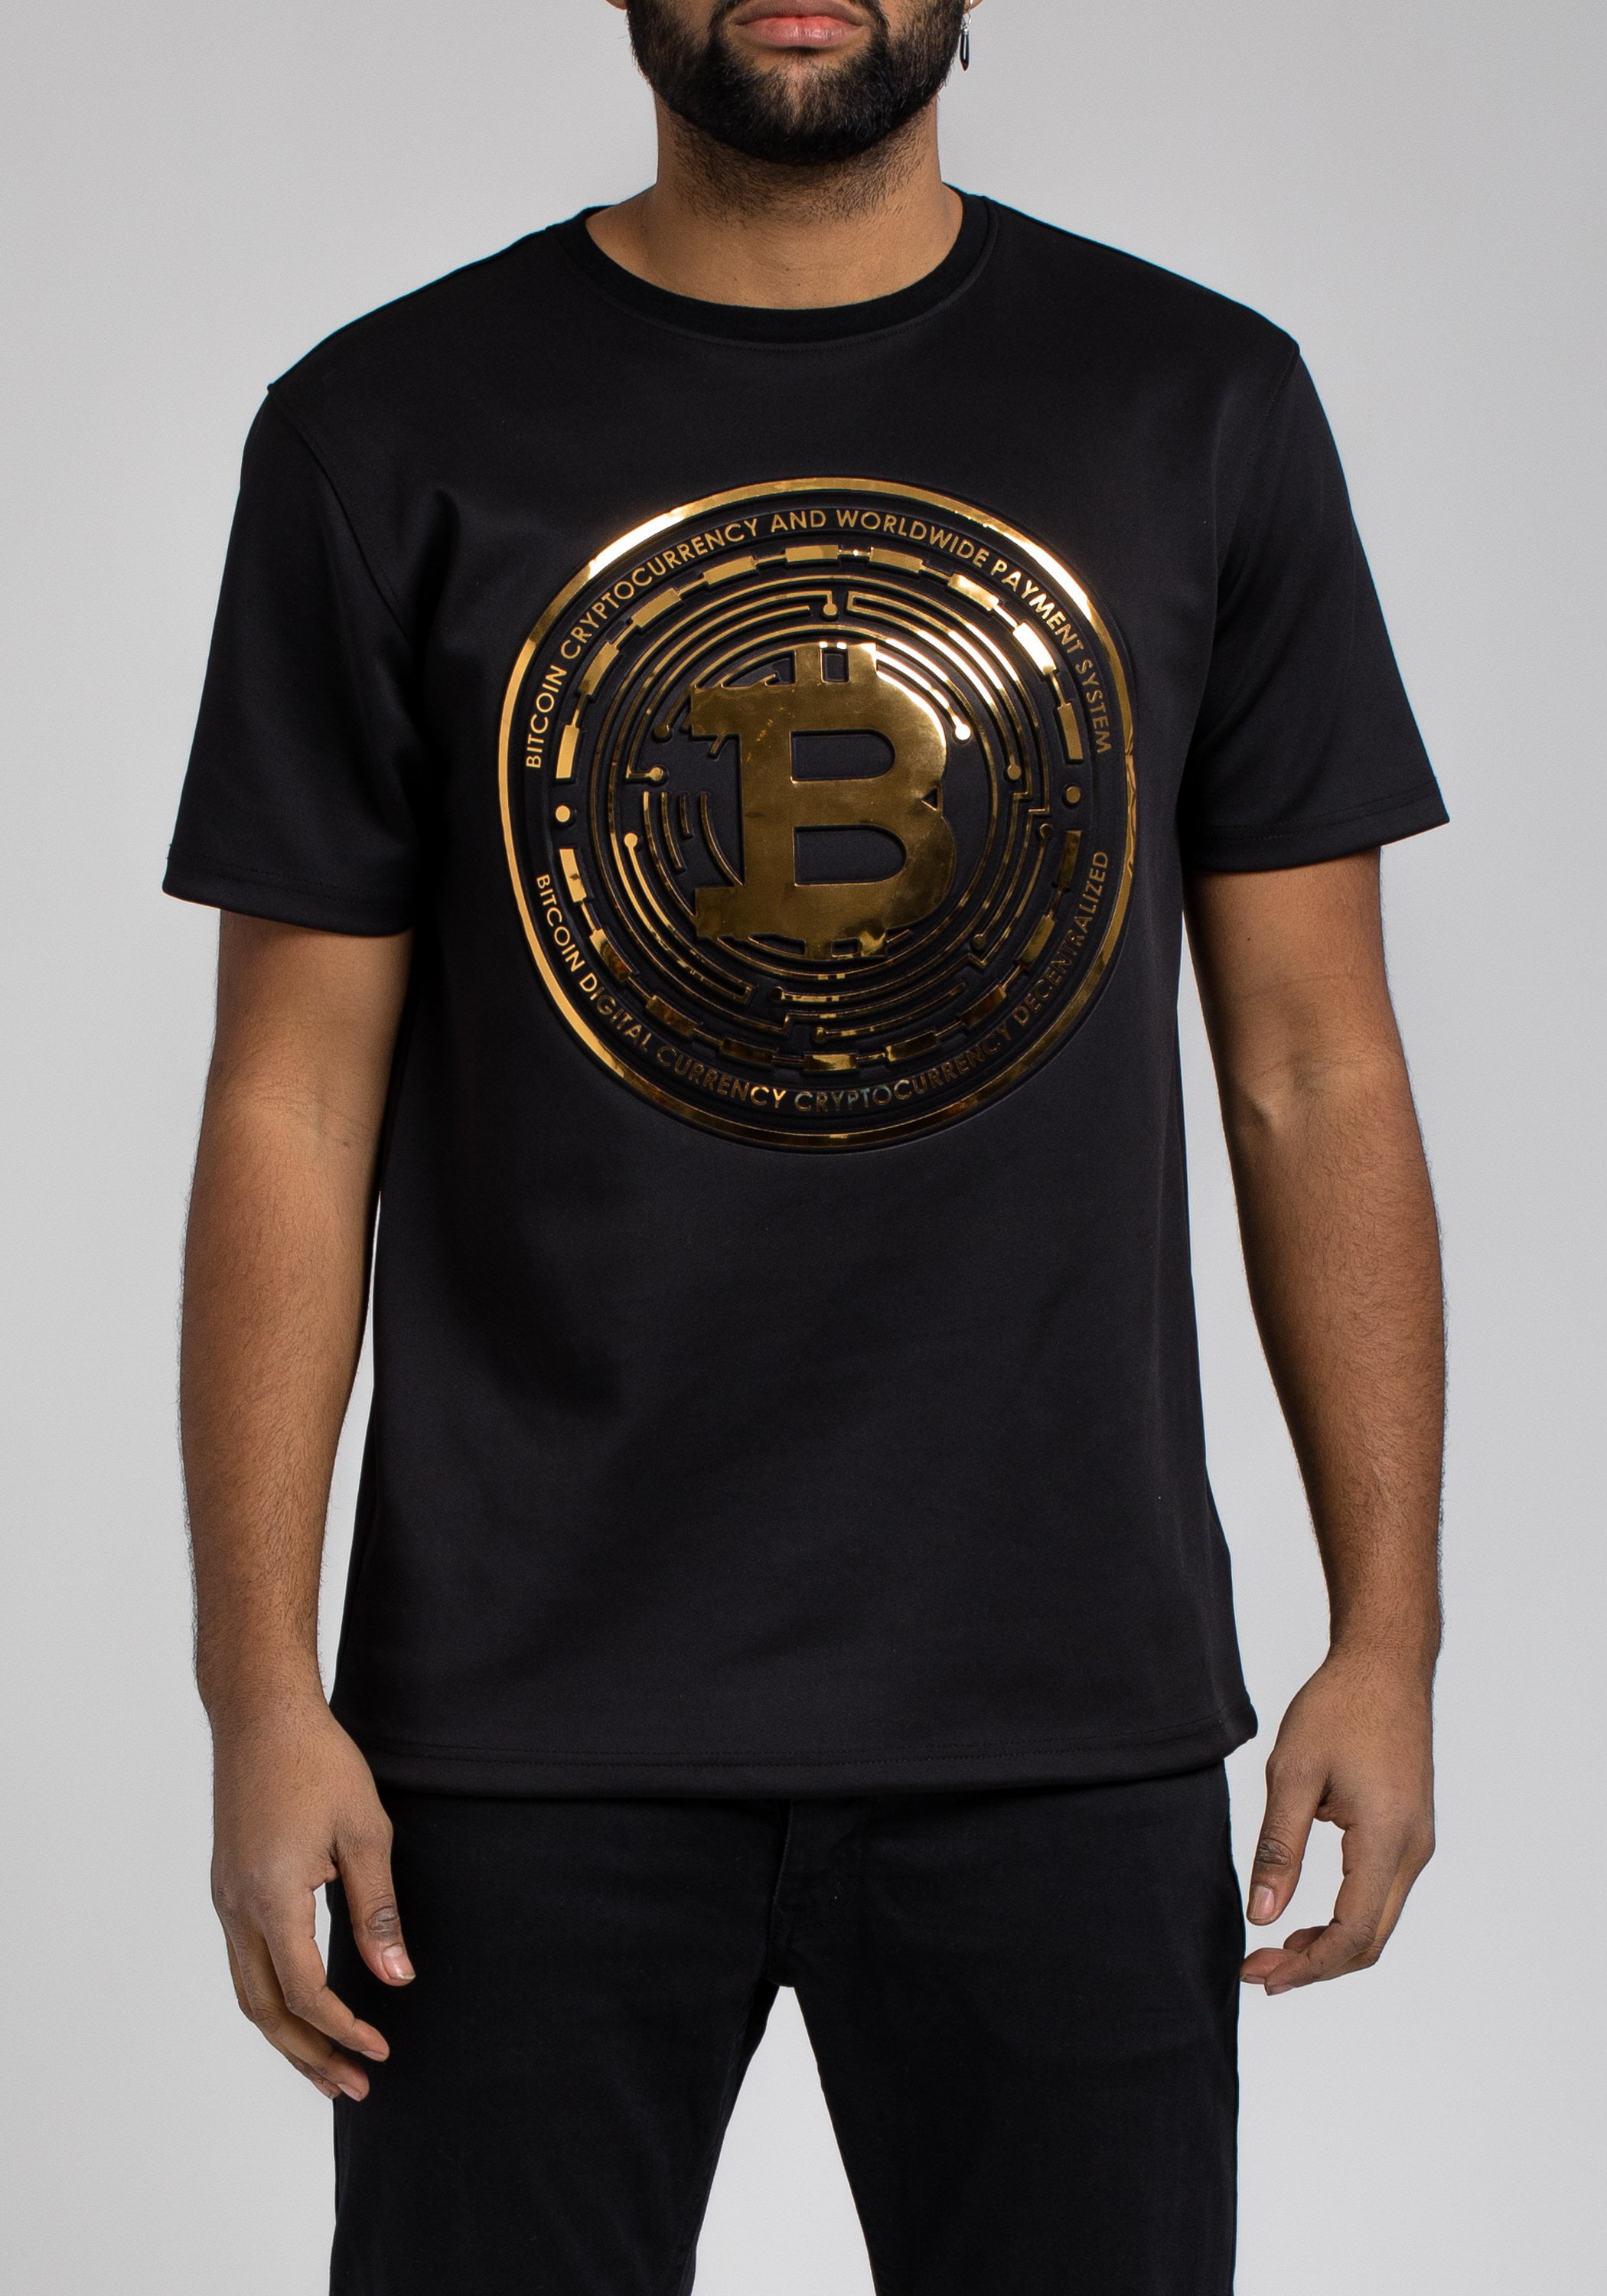 Bitcoin Black//Gold T SHIRT S-6X